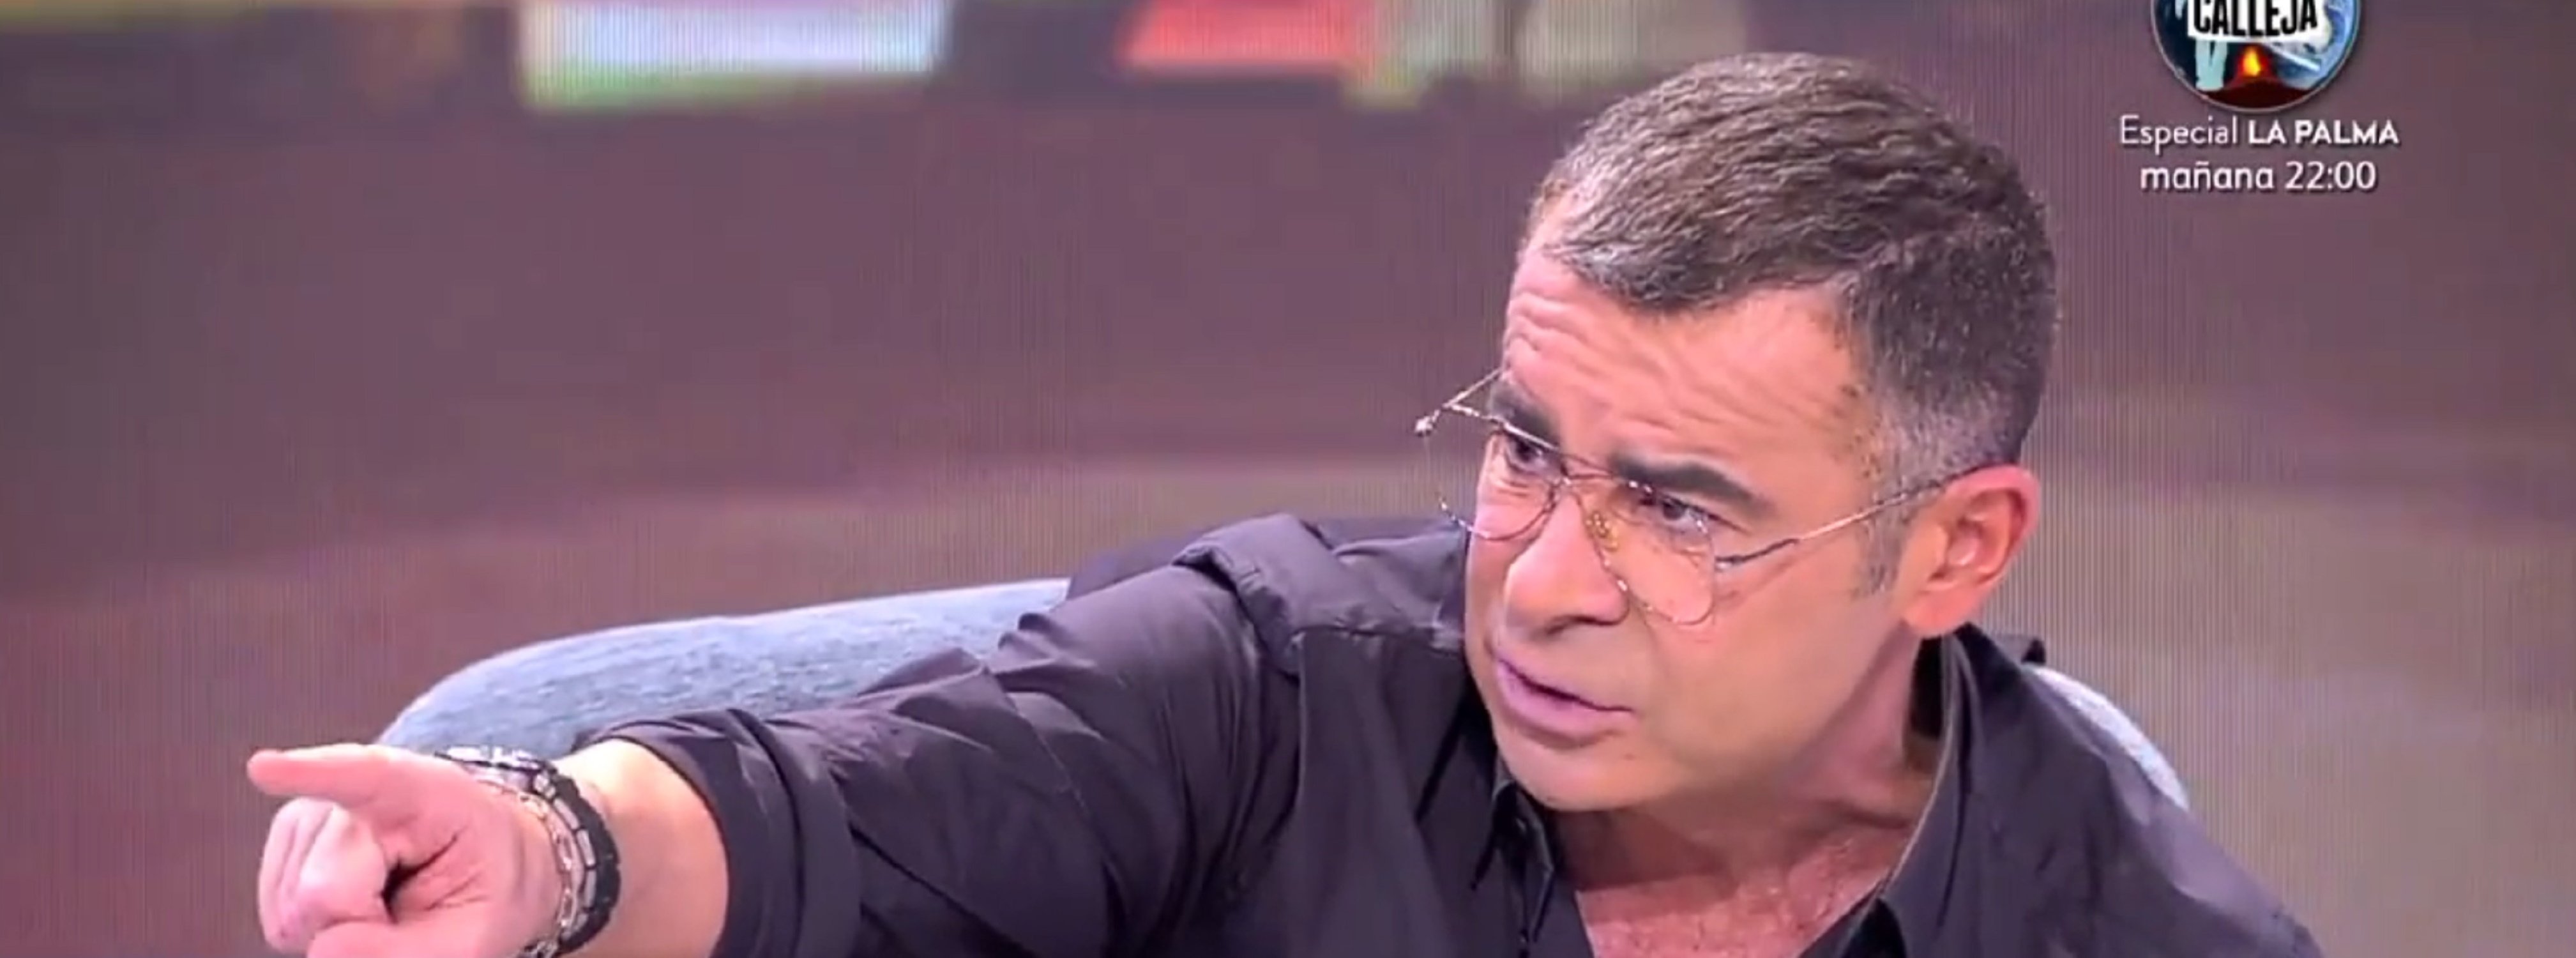 Destrossen Jorge Javier per censurar una pregunta de maltractaments: "Fuera de la TV!"